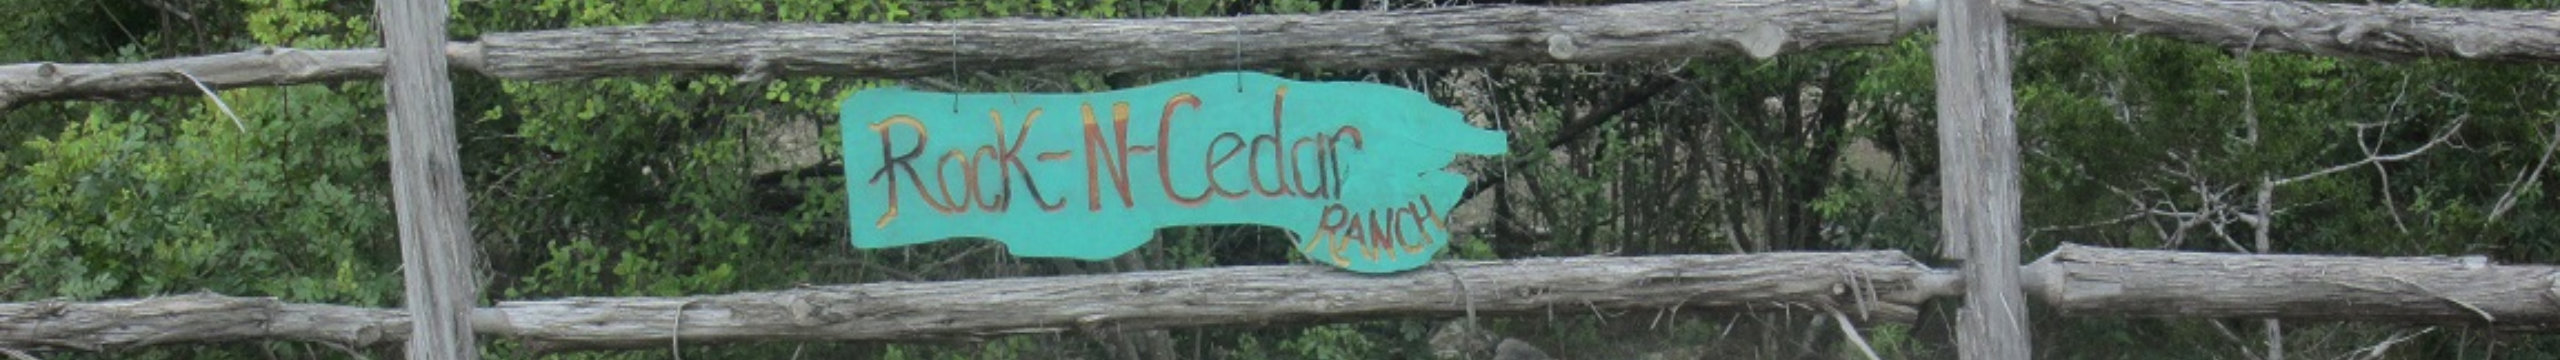 Rock-N-Cedar Ranch